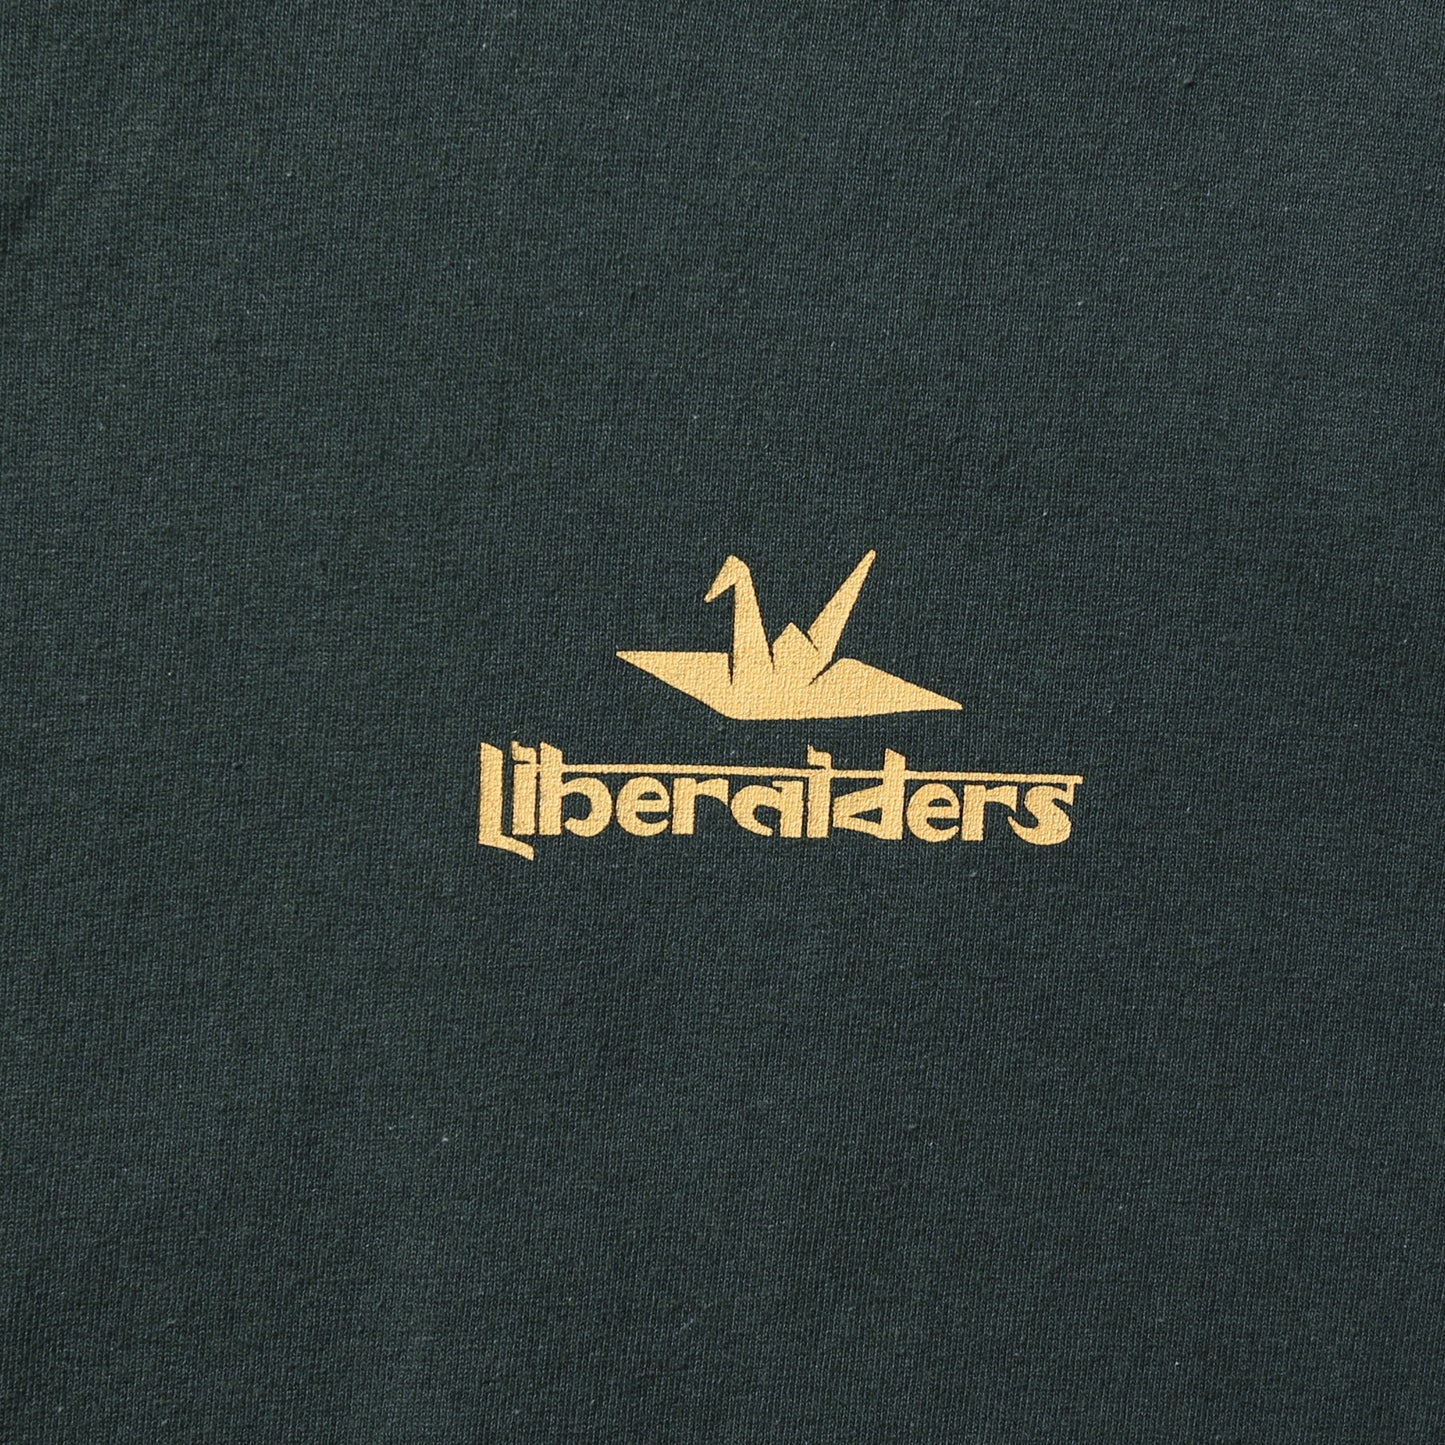 Liberaiders ® (リベレイダース)/SLEEVE LOGO L/S TEE 70503 / GREEN